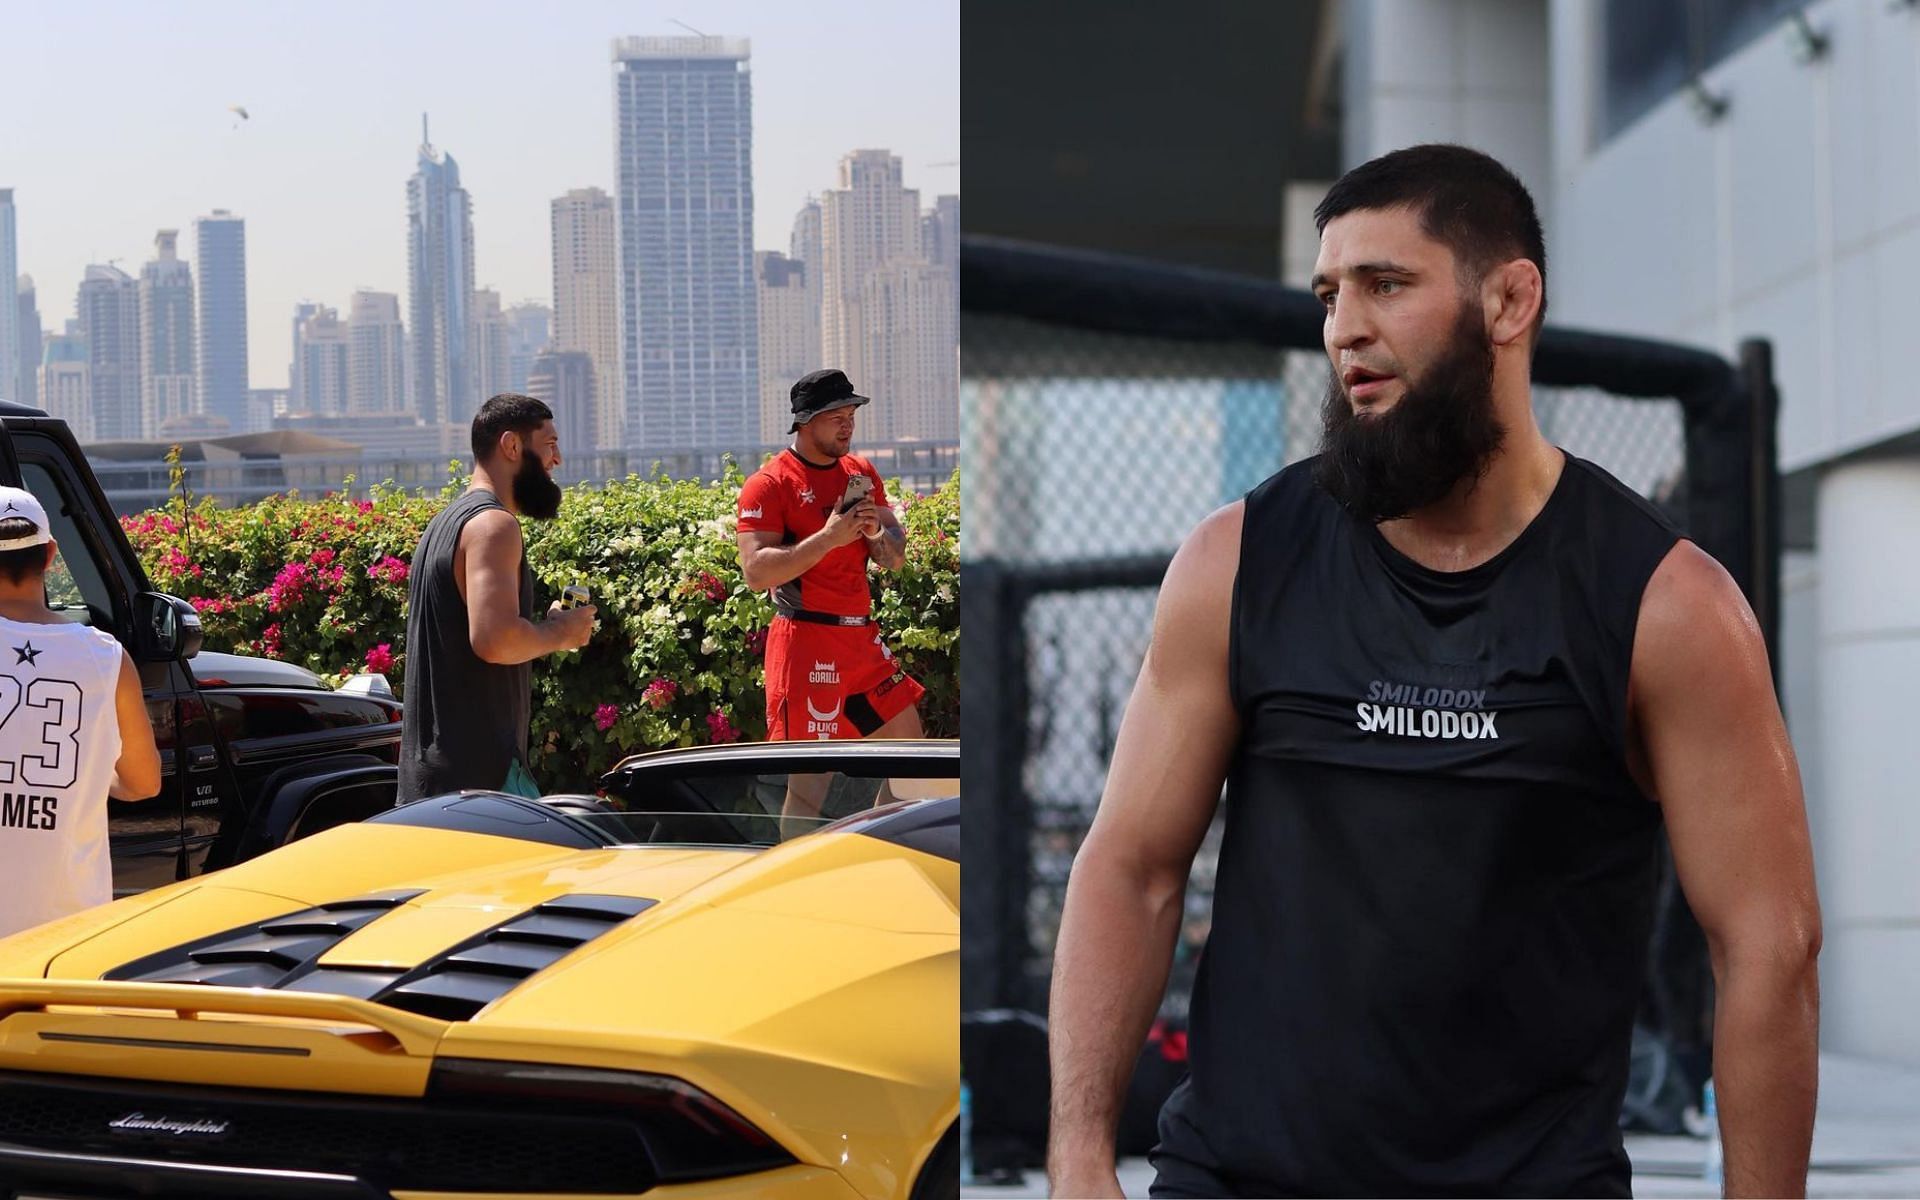 Khamzat Chimaev in Dubai (left) and Khamzat Chimaev training in Dubai (right) (Image credits @khamzat_chimaev on Instagram)